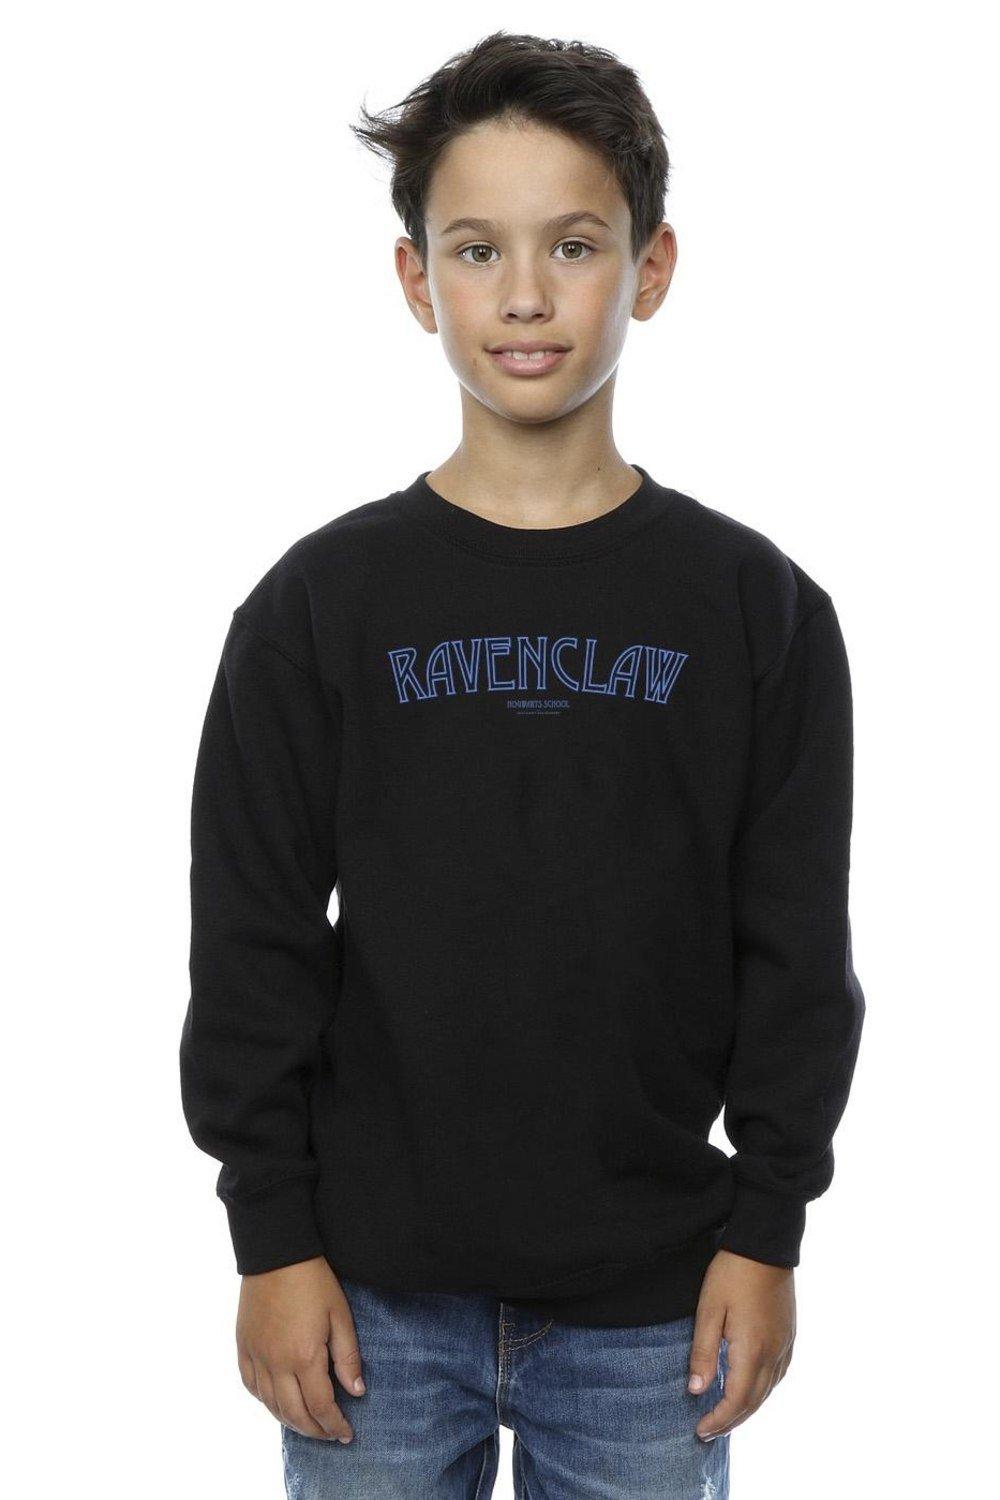 Ravenclaw Logo Sweatshirt